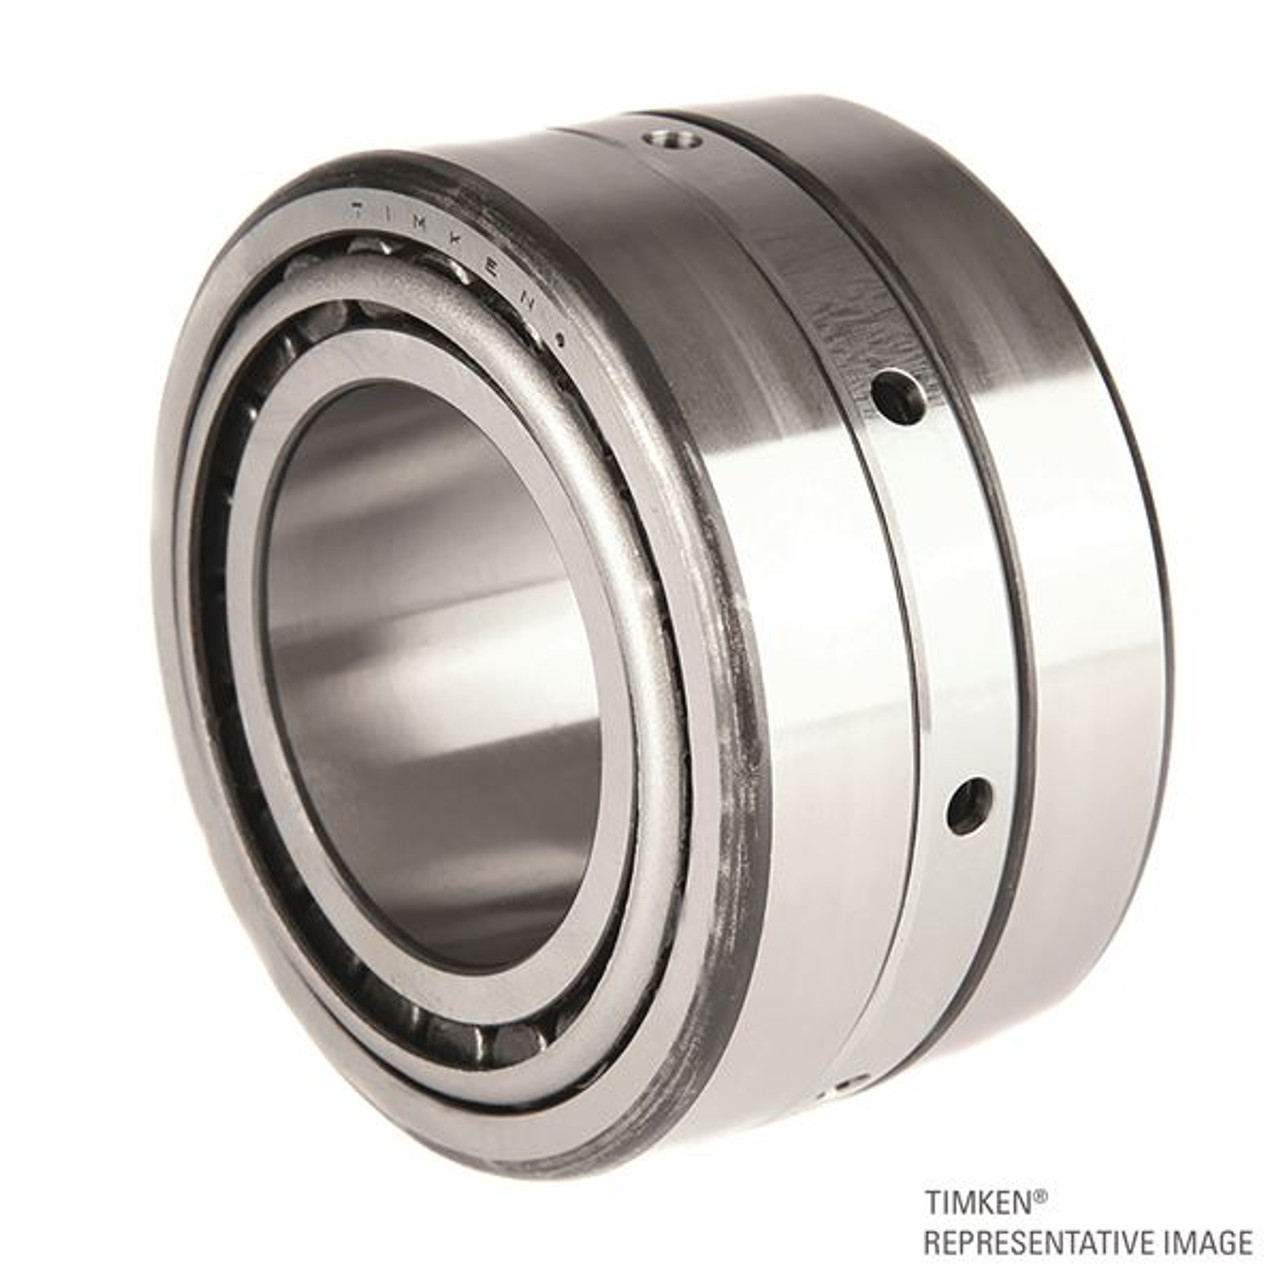 Timken® TDI Single Double Cone Assembly  HM926749-90069